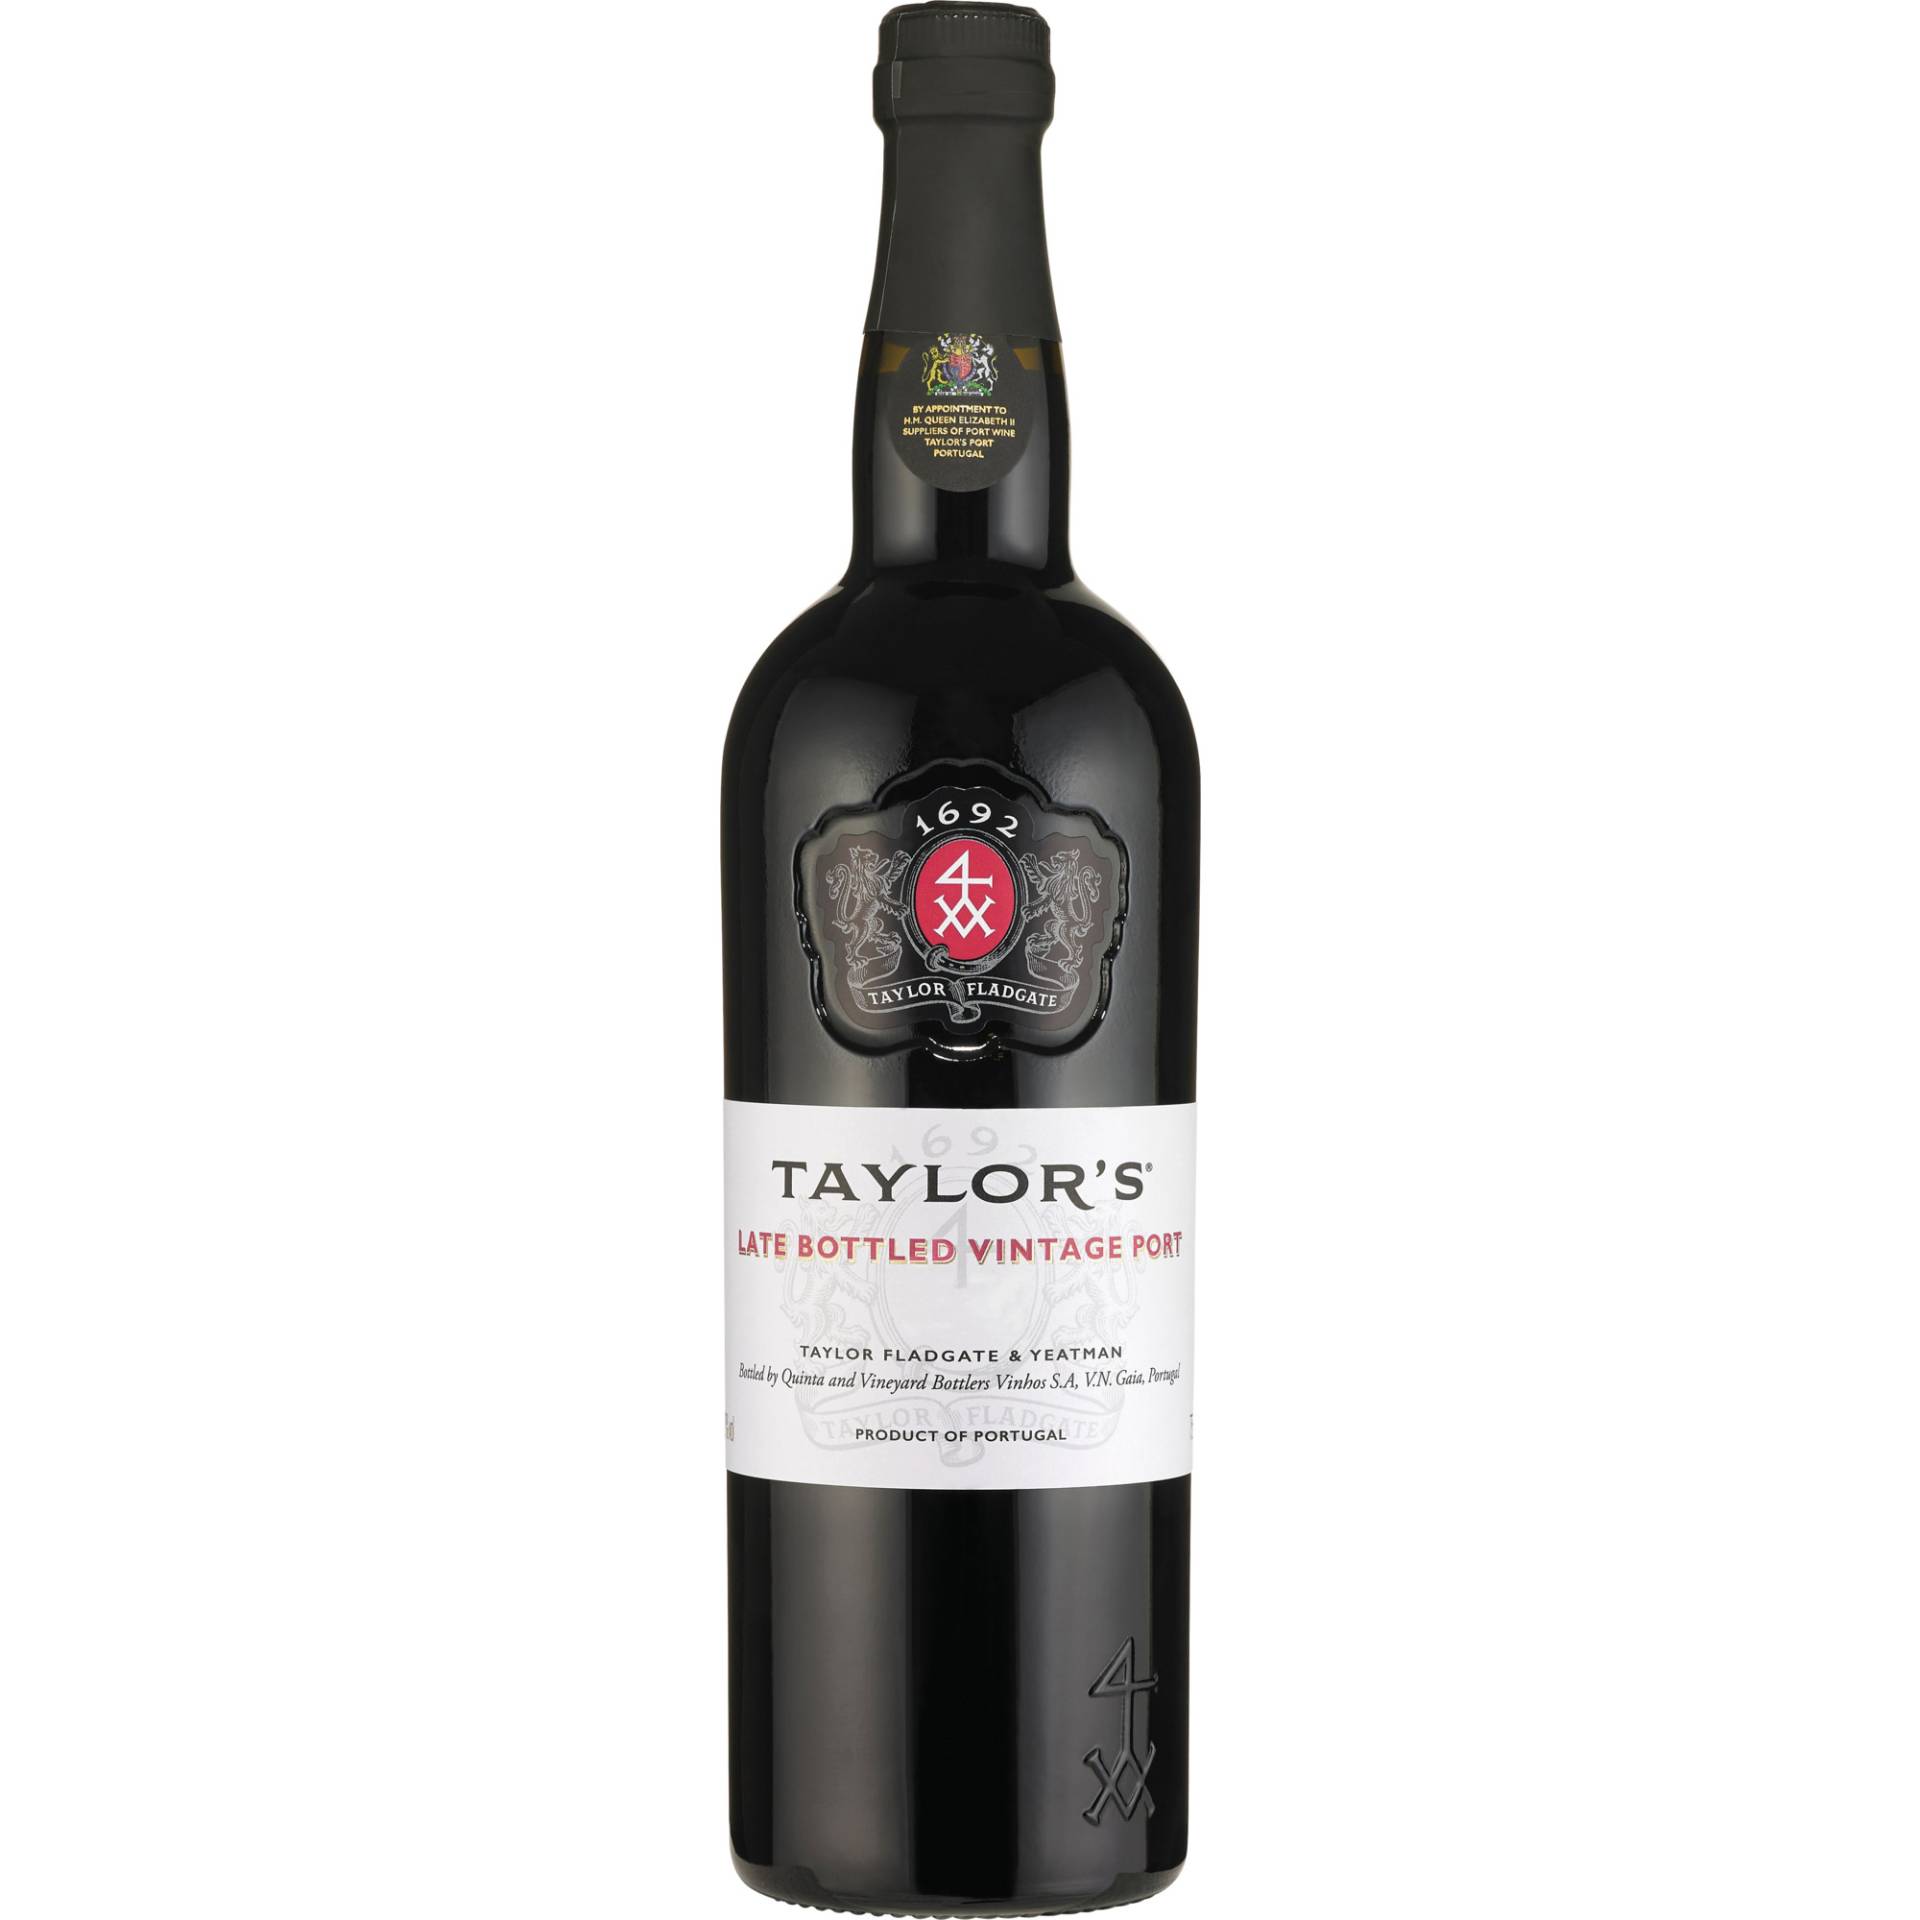 Taylor' s Late Bottled Vintage Port, Douro DOC, 20% Vol., Douro, 2015, Spirituosen von Taylor Fladgate & Yeatman, Rua do Choupelo 250, 4400-088 Vila Nova de Gaia, Portugal